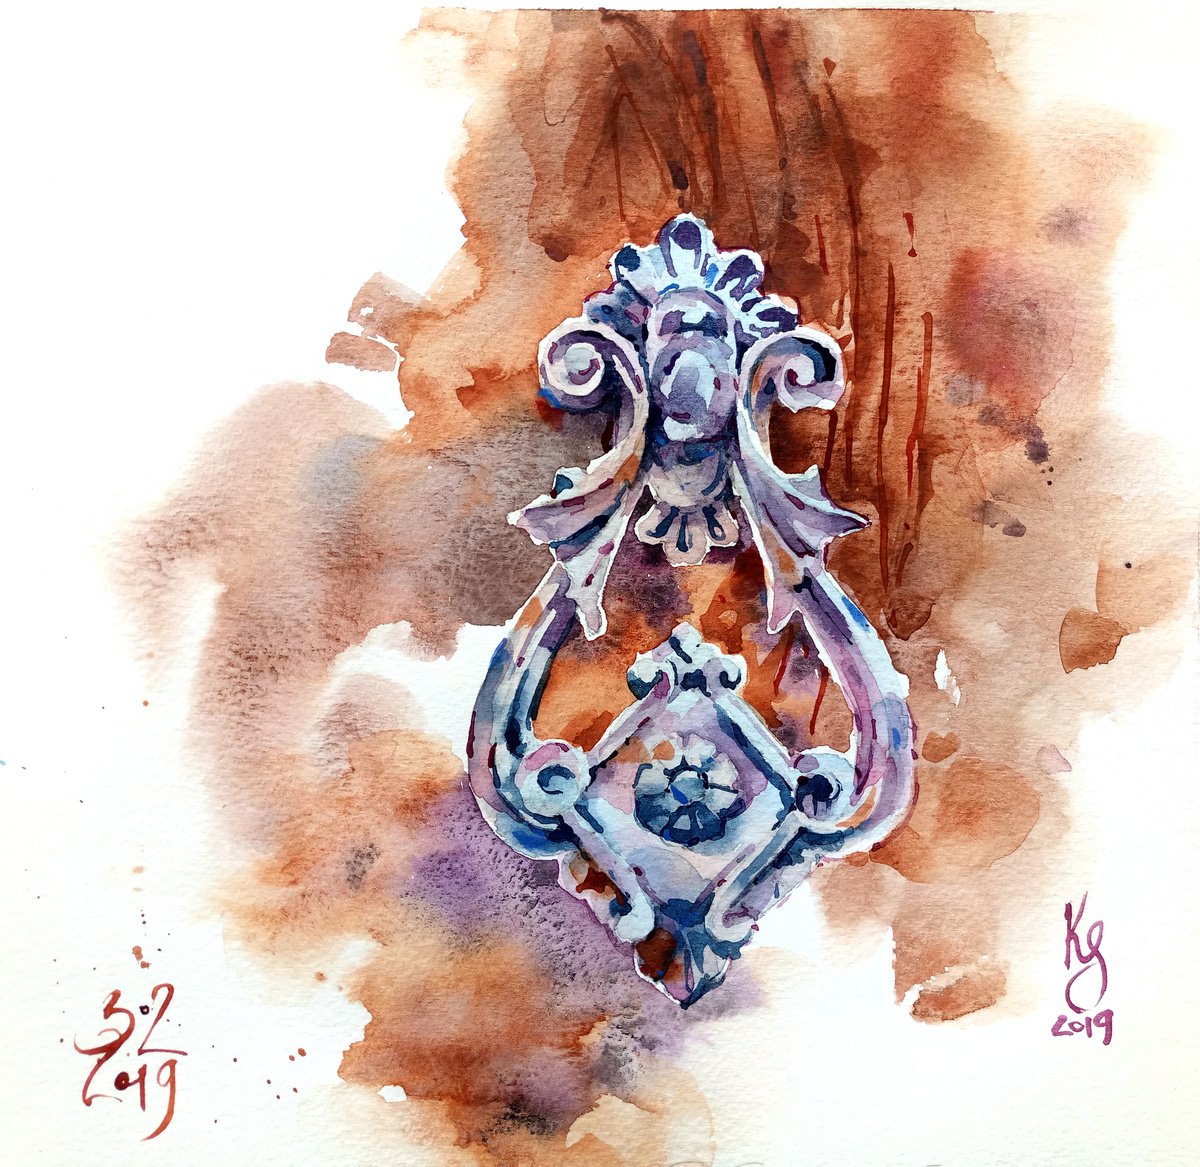 Antique doorknob on a wooden background modern watercolor sketch original illustration by Ksenia Selianko